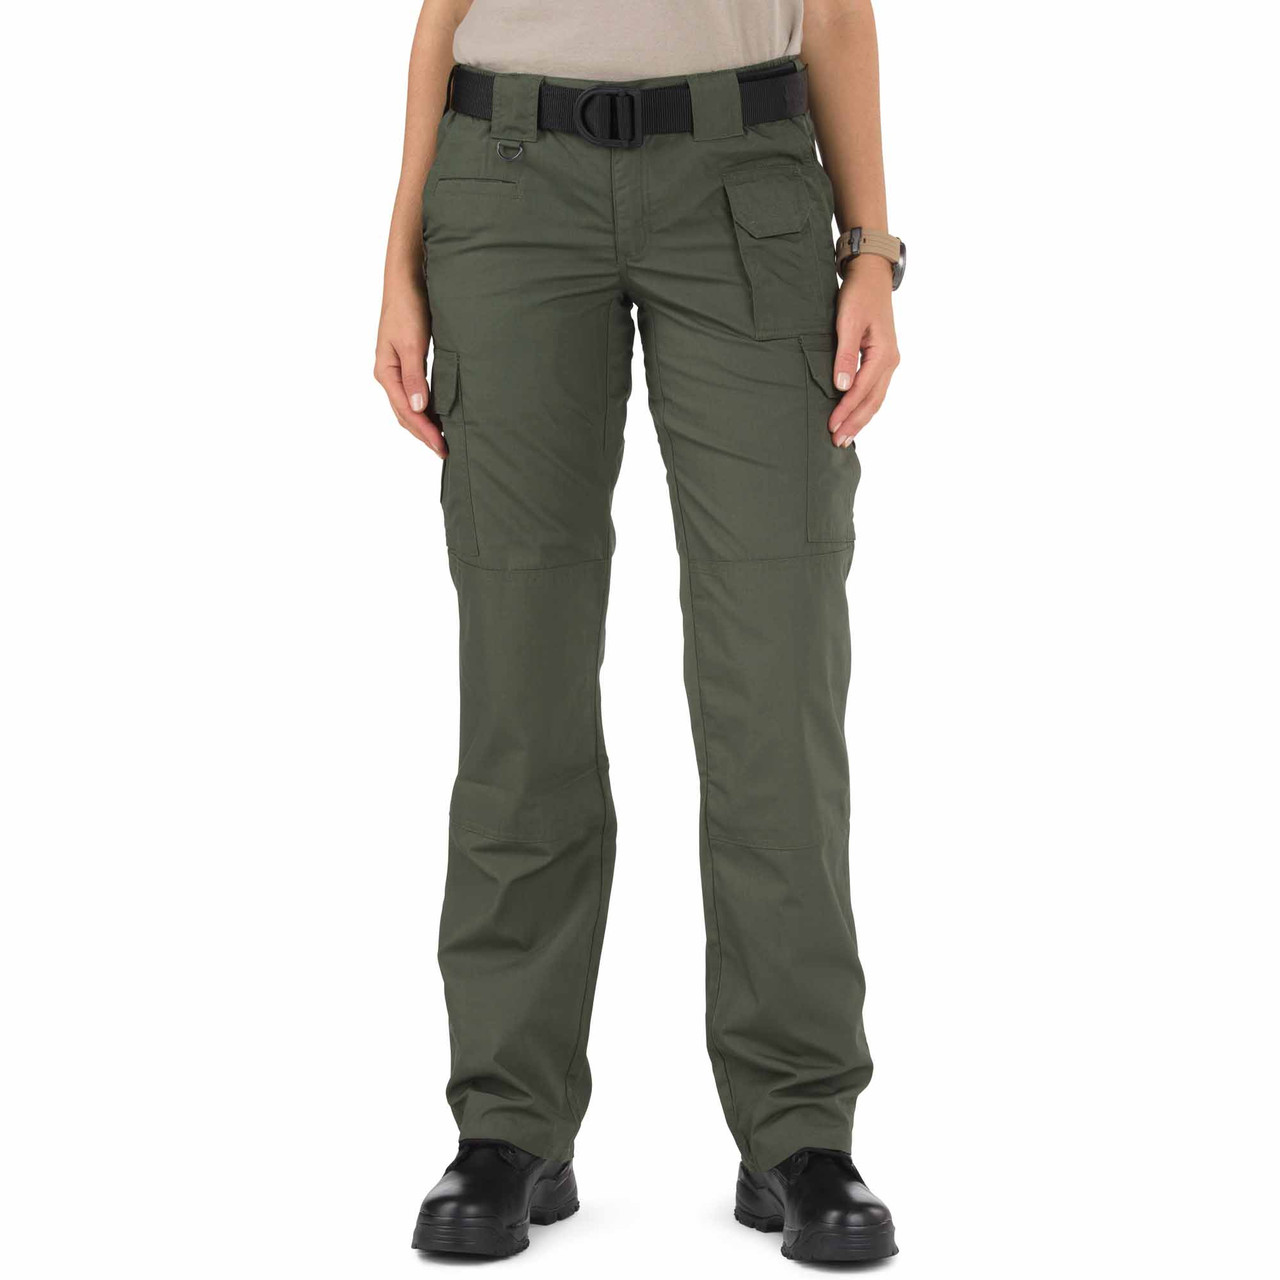 511 Tactical Women's Taclite Pro Ripstop Pant, Sizes: 2-20, Color:  Charcoal, Black, TDU Khaki, TDU Green, Tundra, Dark Navy